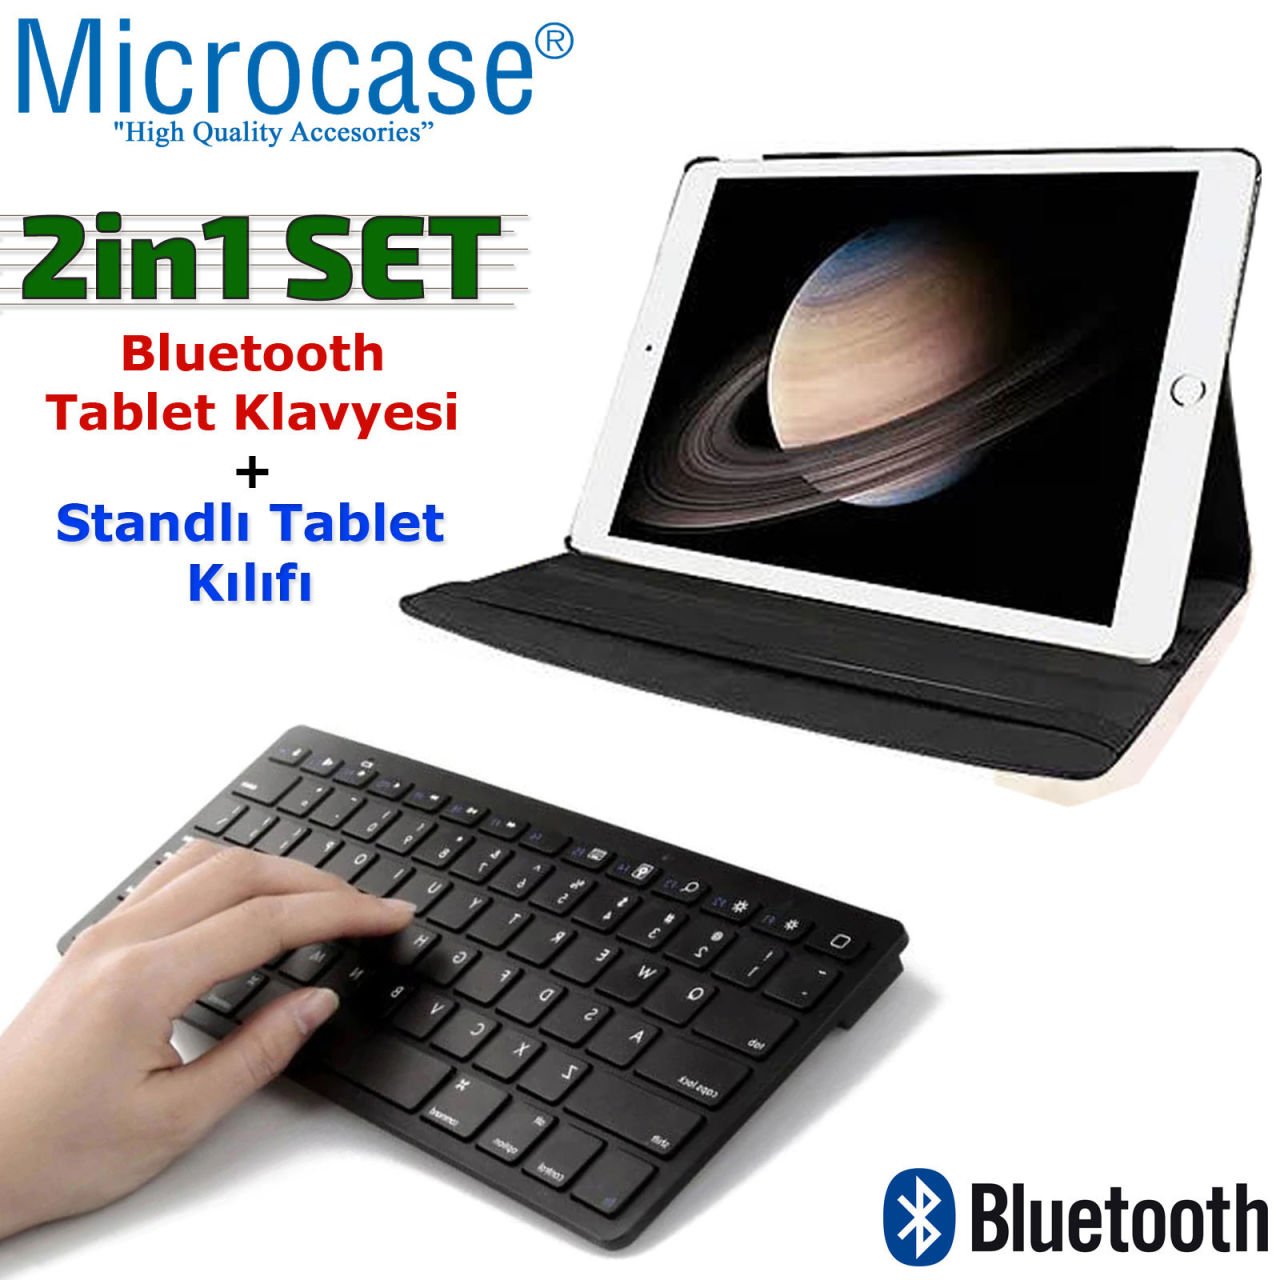 Microcase iPad Pro 12.9 2018 360 Döner Standlı Kılıf + Bluetooth Kablosuz Tablet Klavyesi